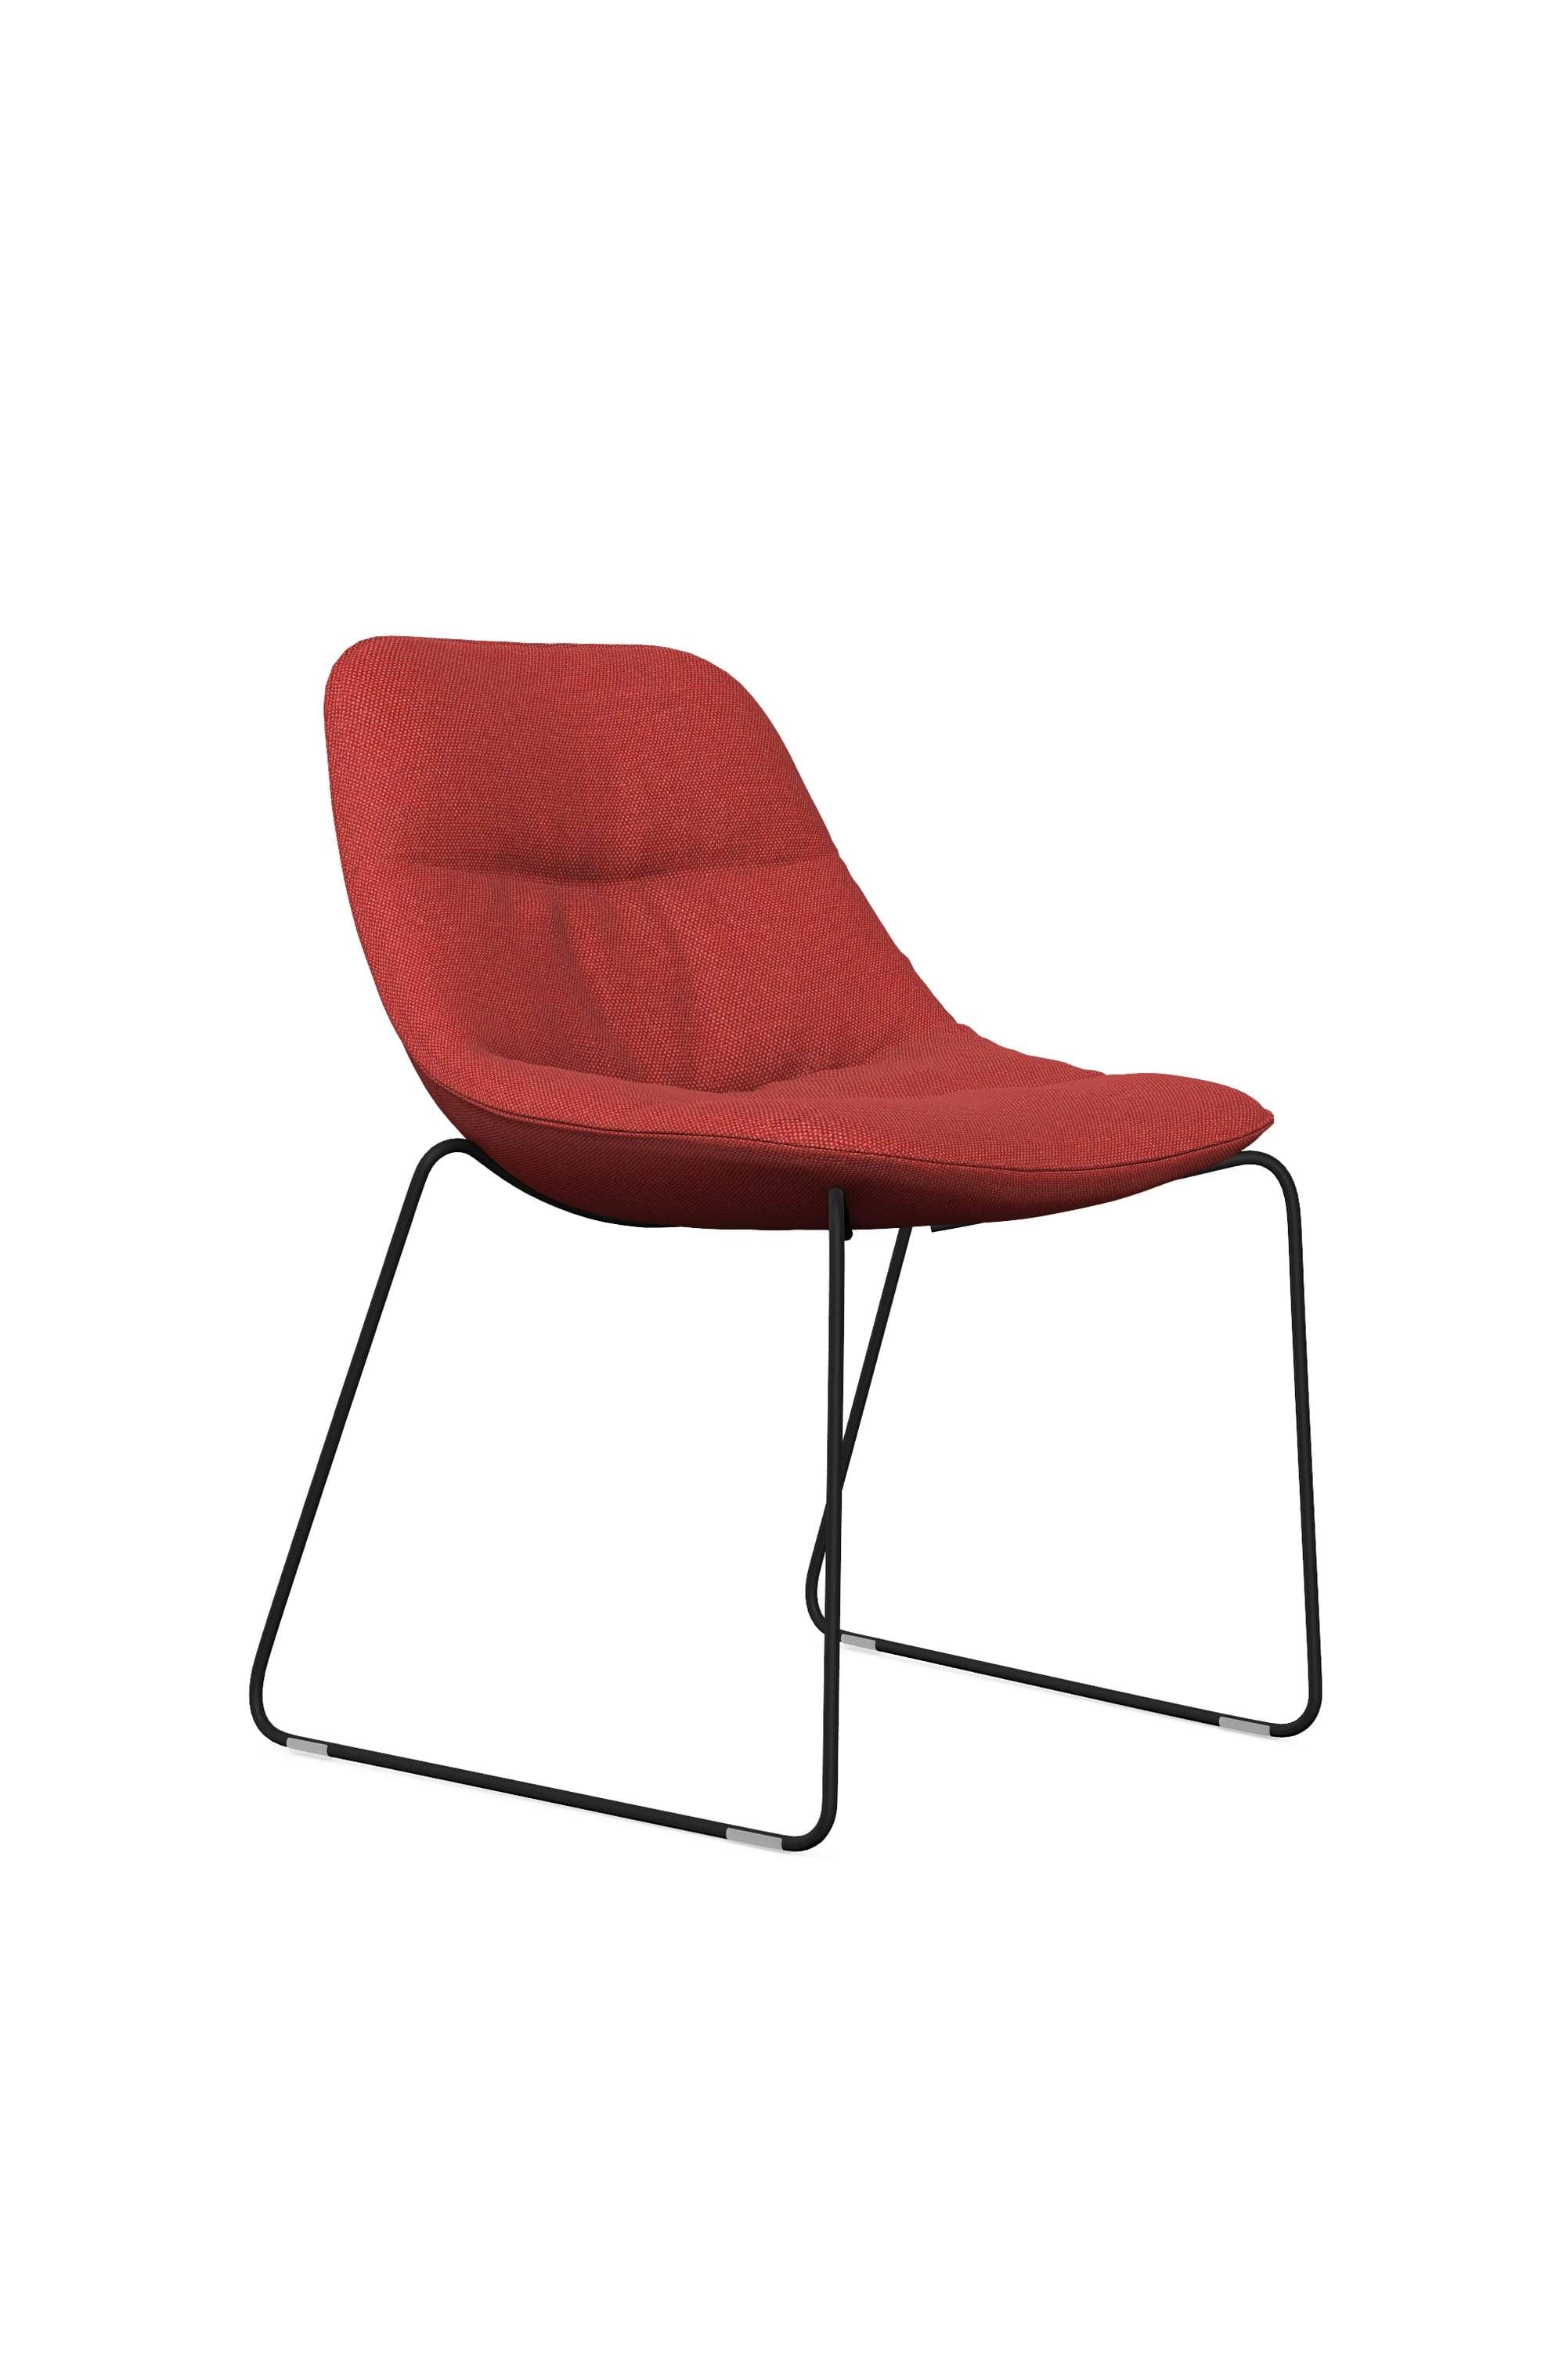 Mishell Soft Chair Skid Metal Legs